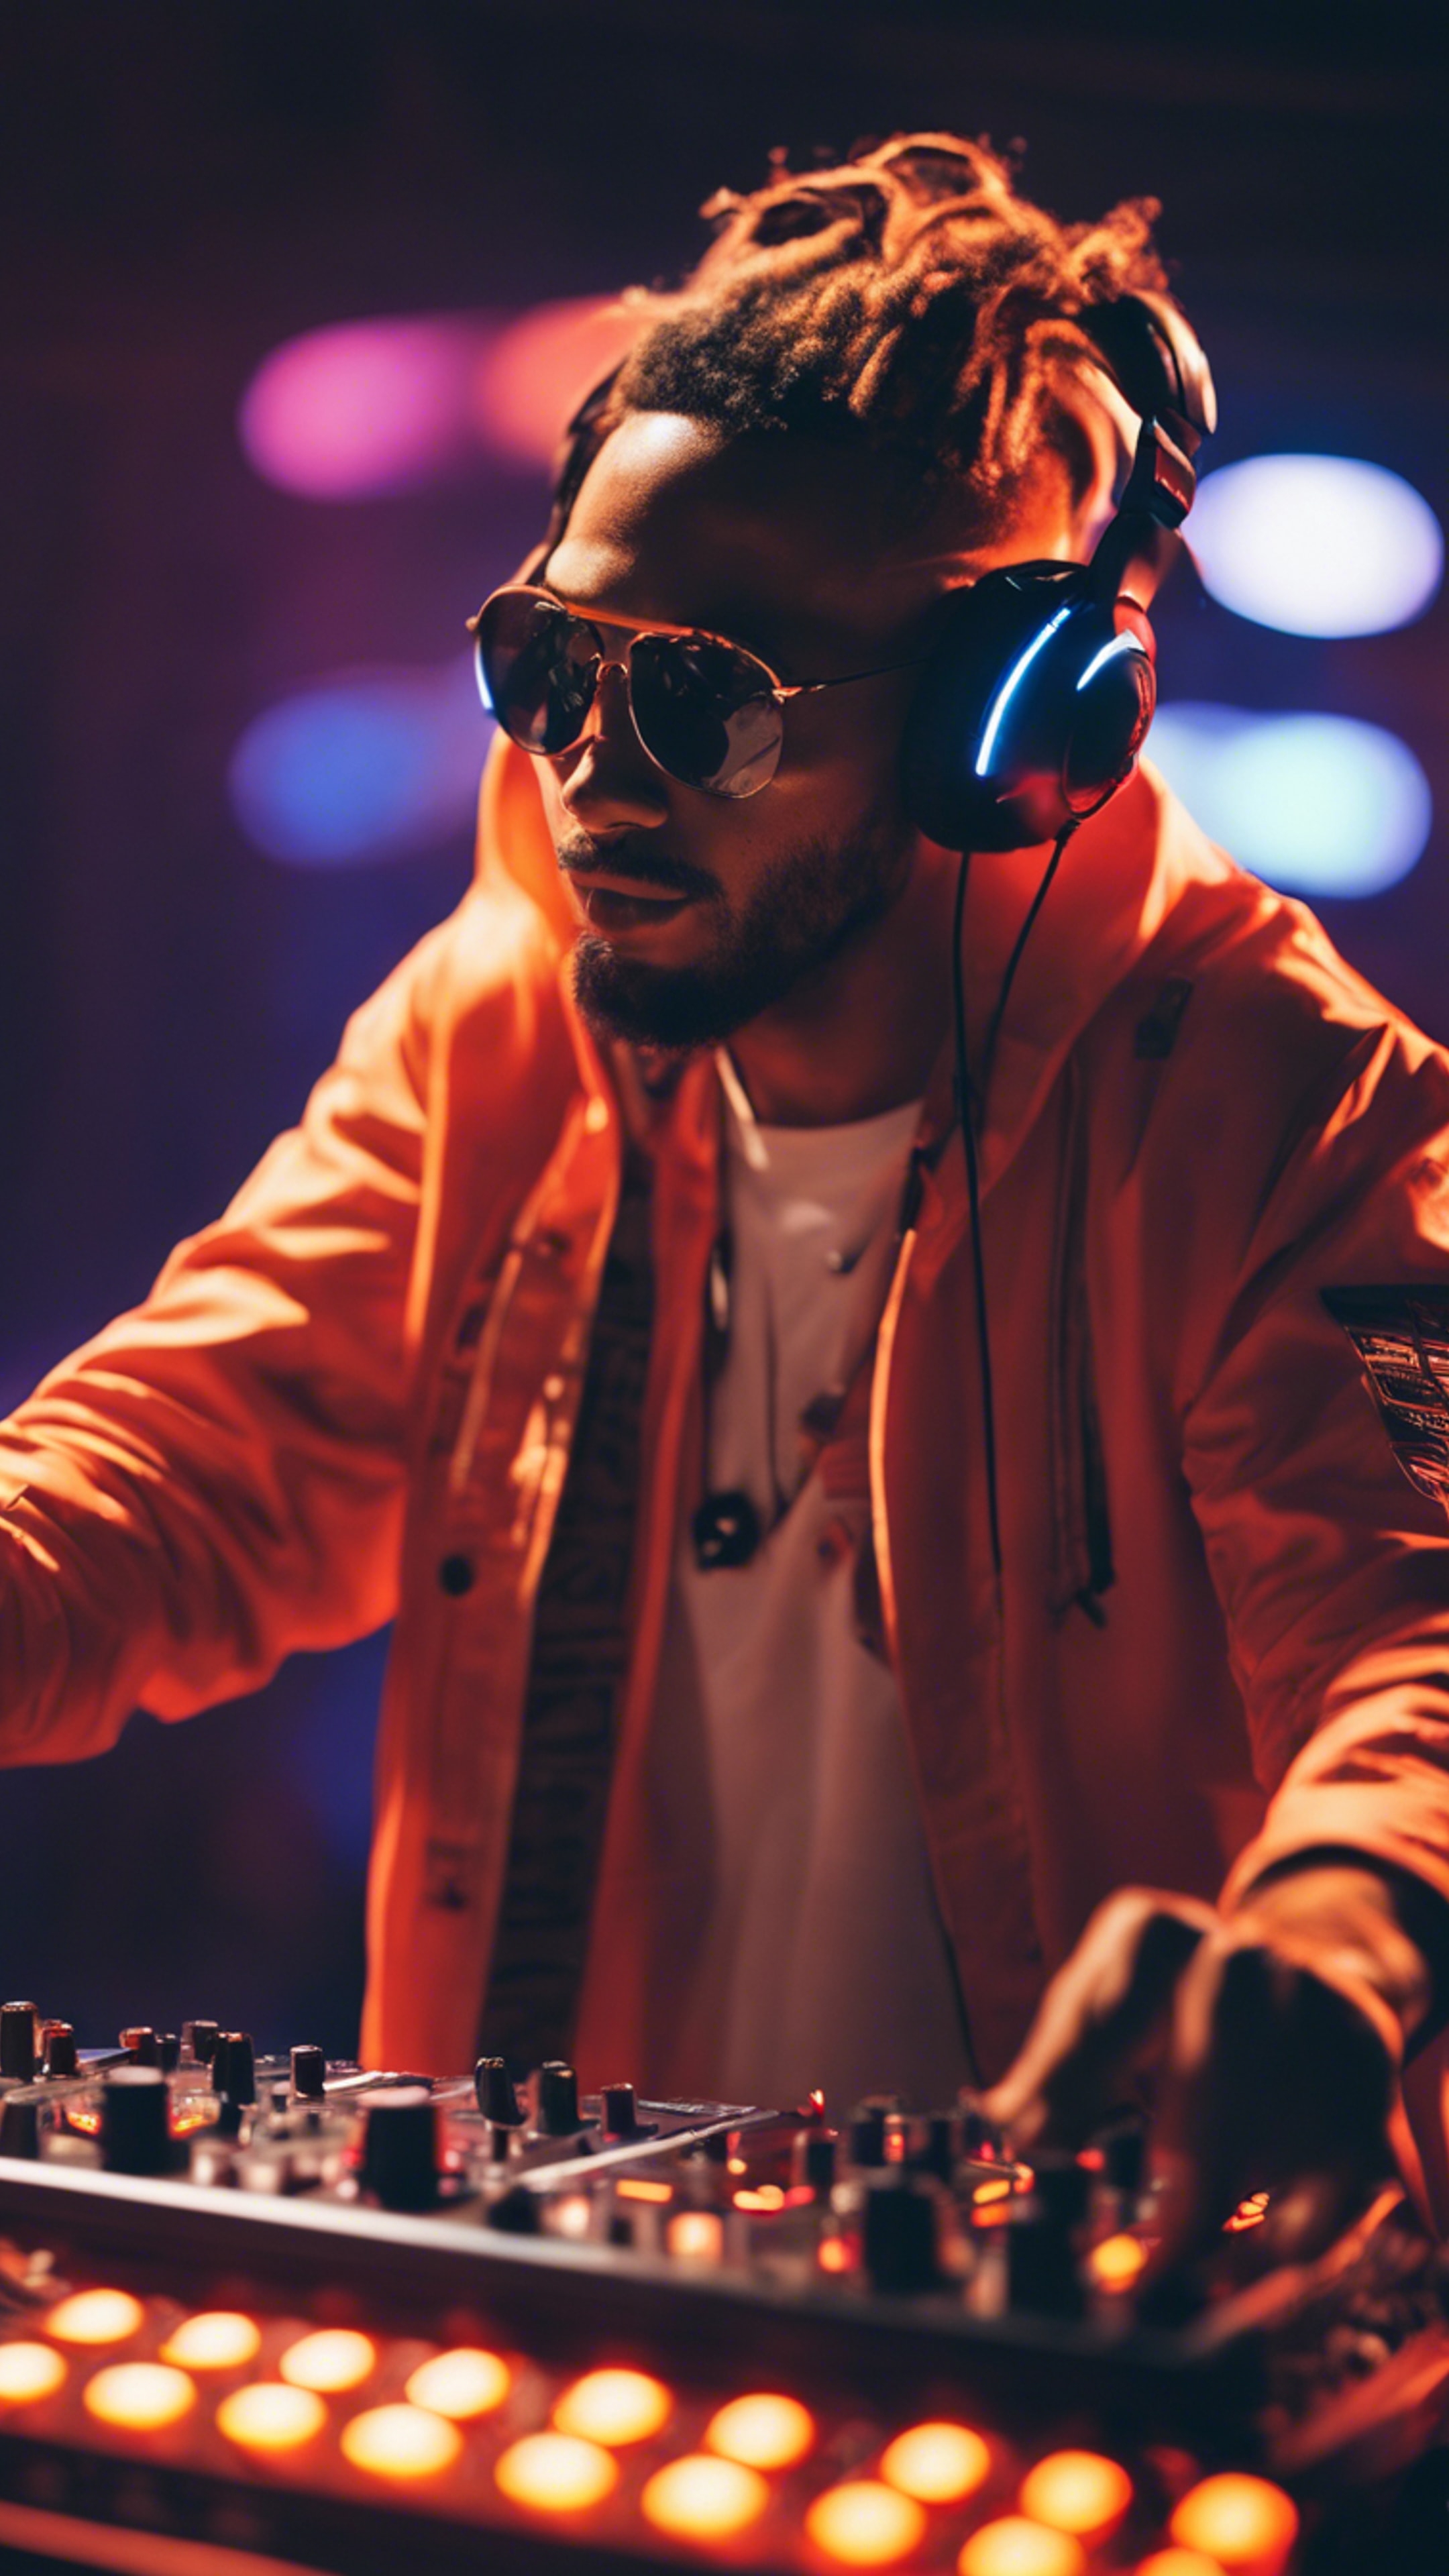 An energetic DJ at a music festival wearing neon orange headphones. Tapeta[135547dc2eef4b3588bf]